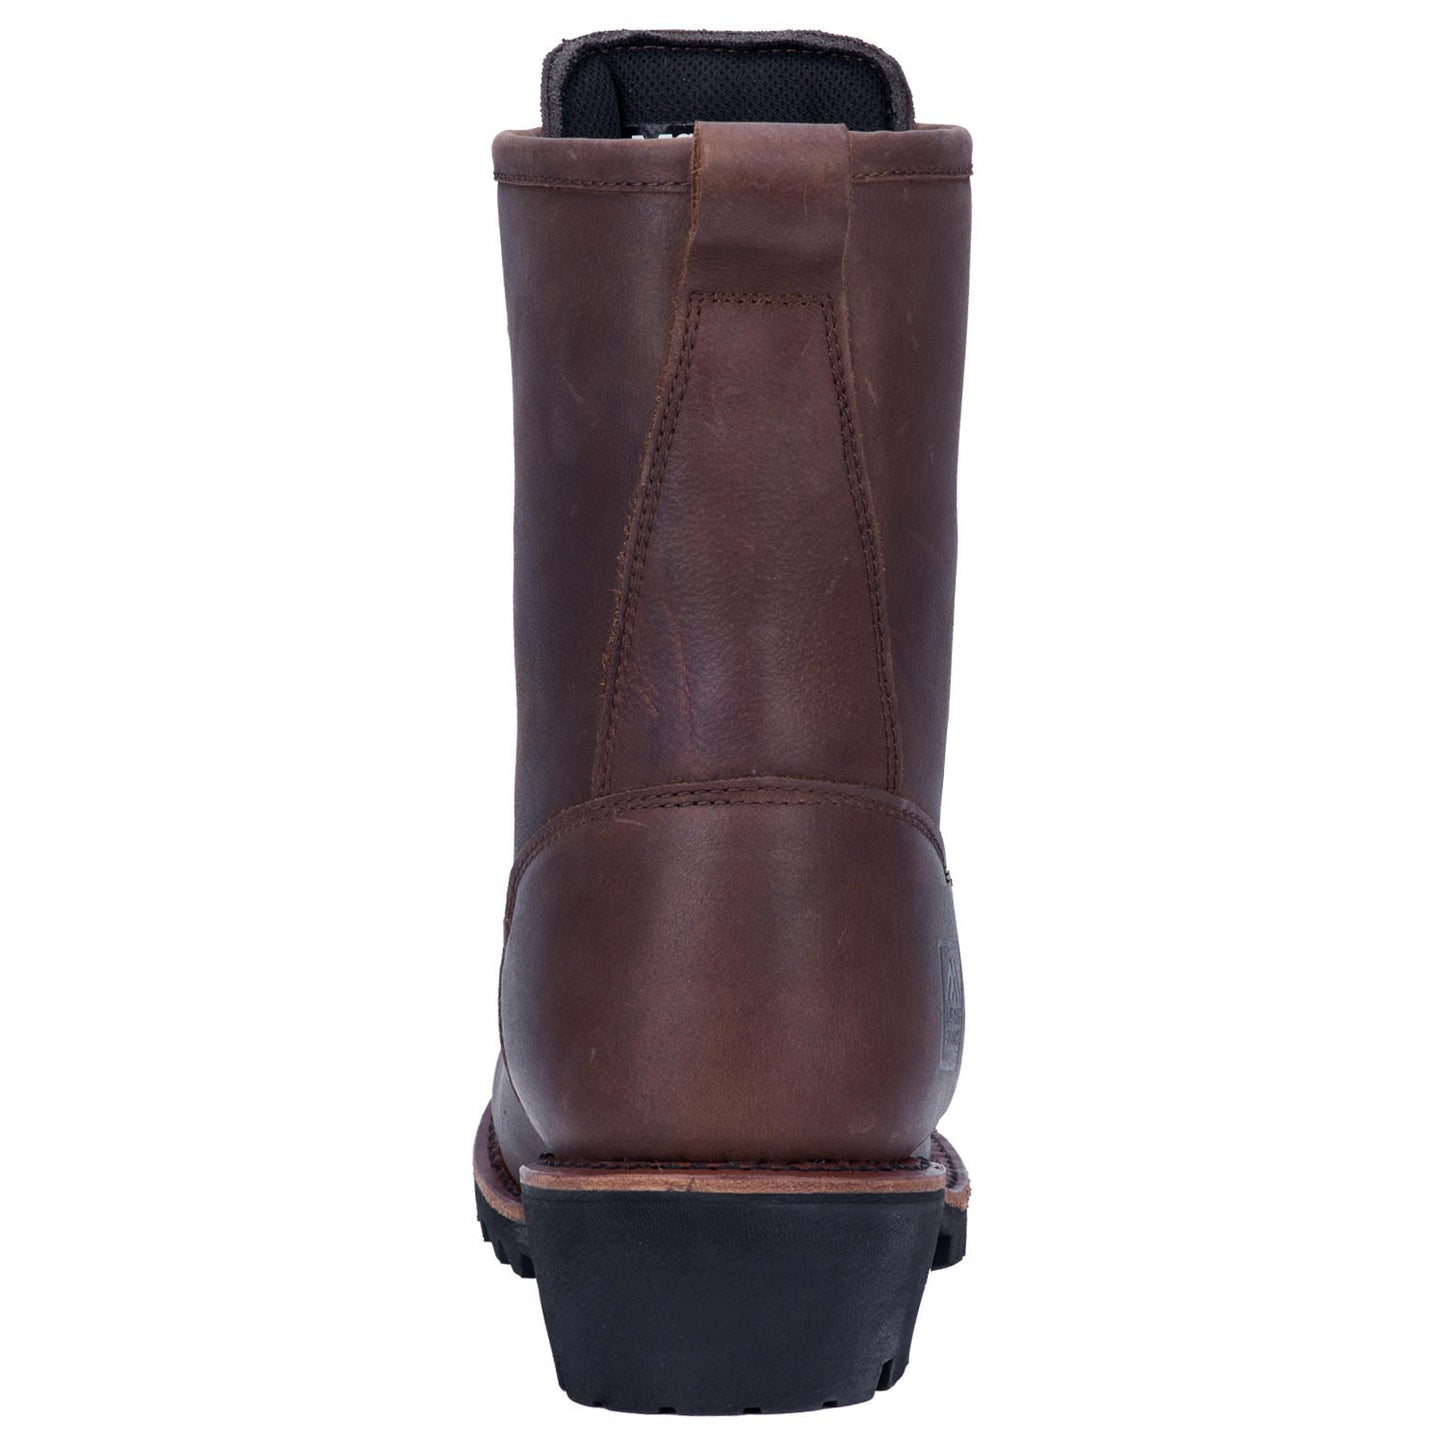 McRae Tree Line Steel Toe Waterproof Brown Lace-Up Boots MR89394